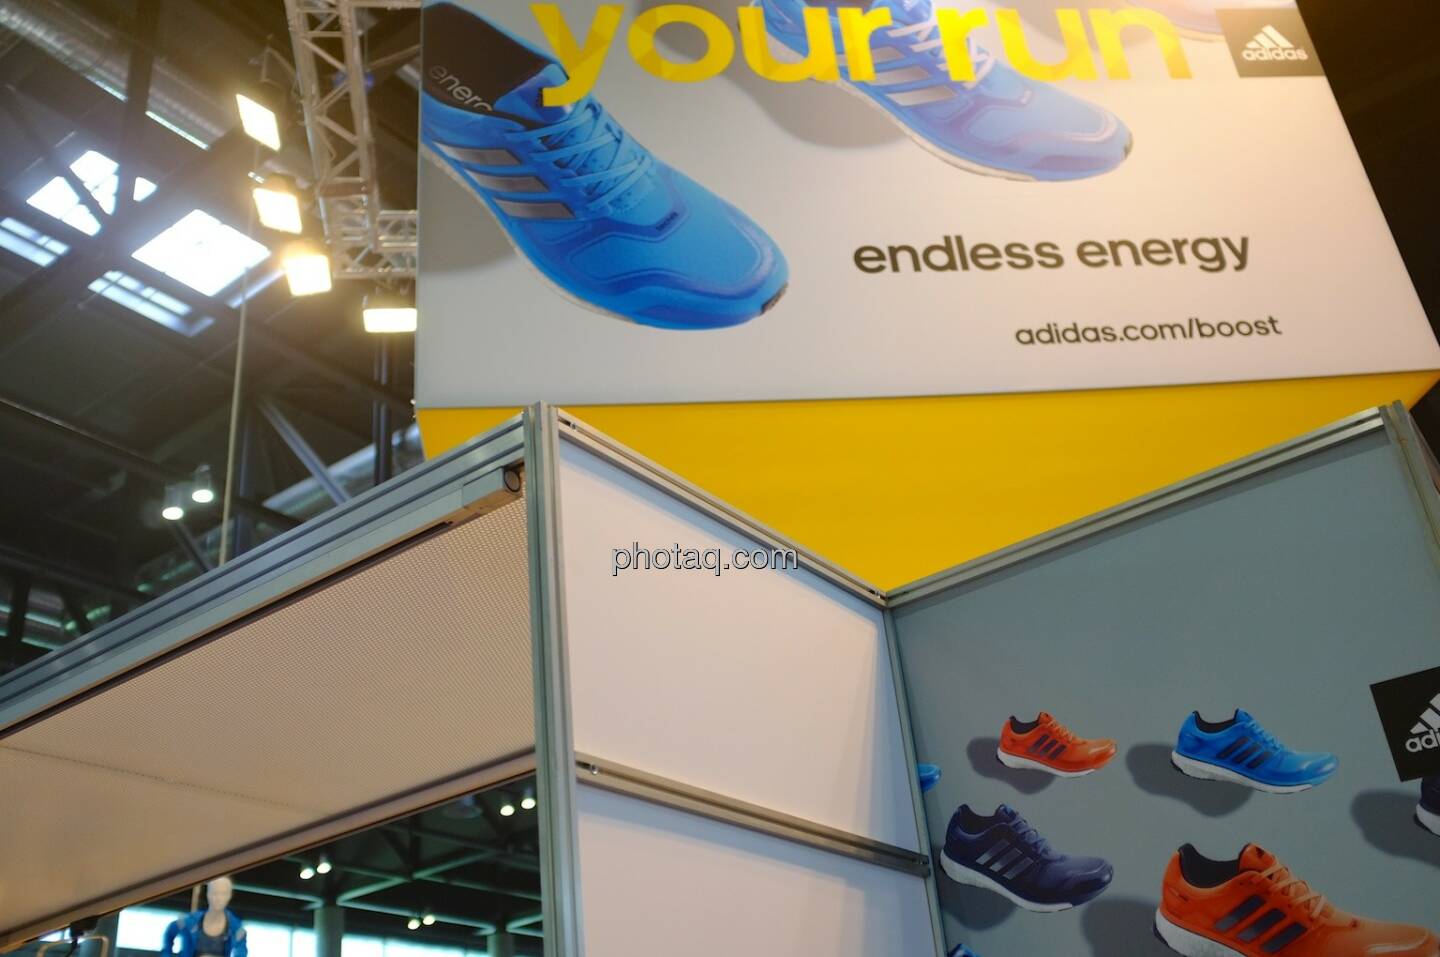 Your run, endless energy, adidas